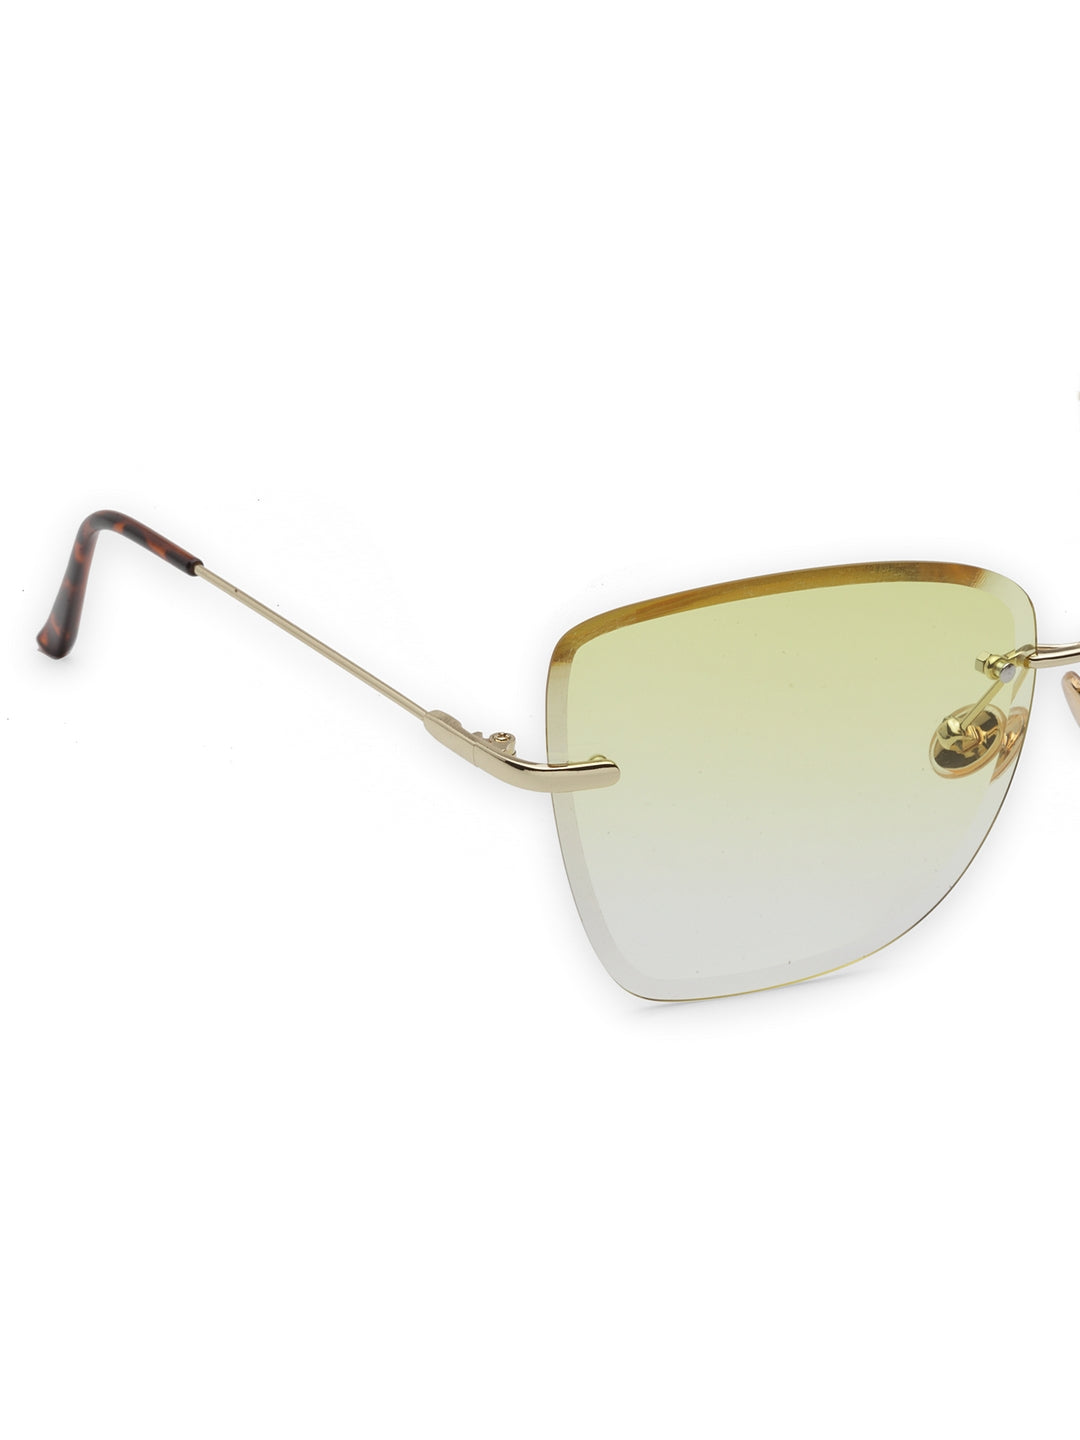 Avant-Garde Paris Summer Fashionable Rimless Ocean Sunglasses